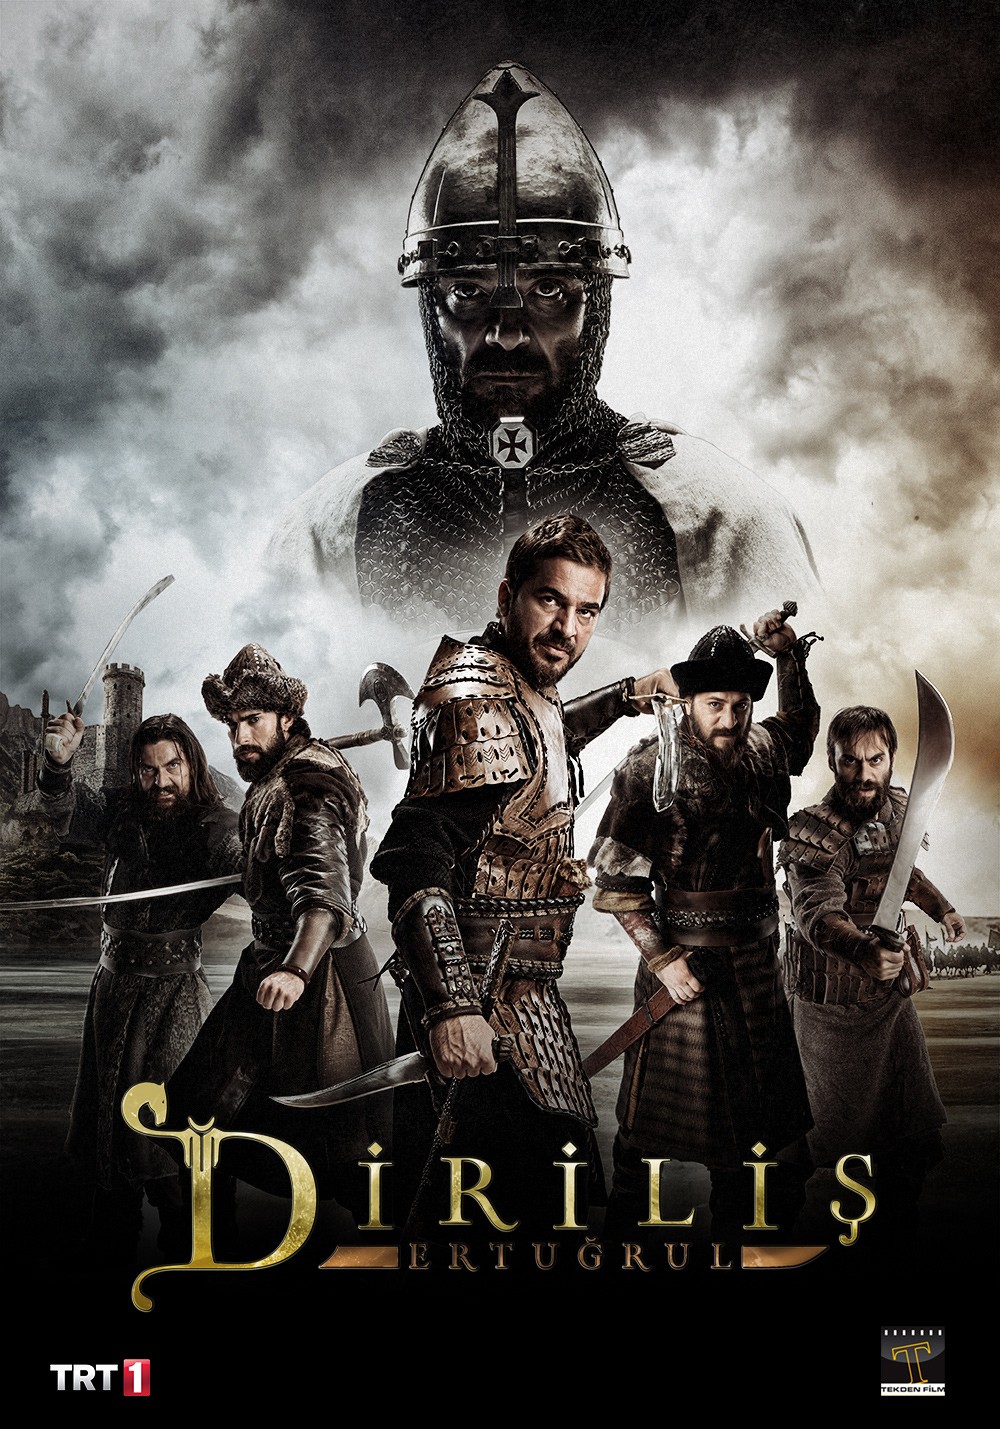 Extra Large TV Poster Image for Dirilis: Ertugrul (#23 of 30)